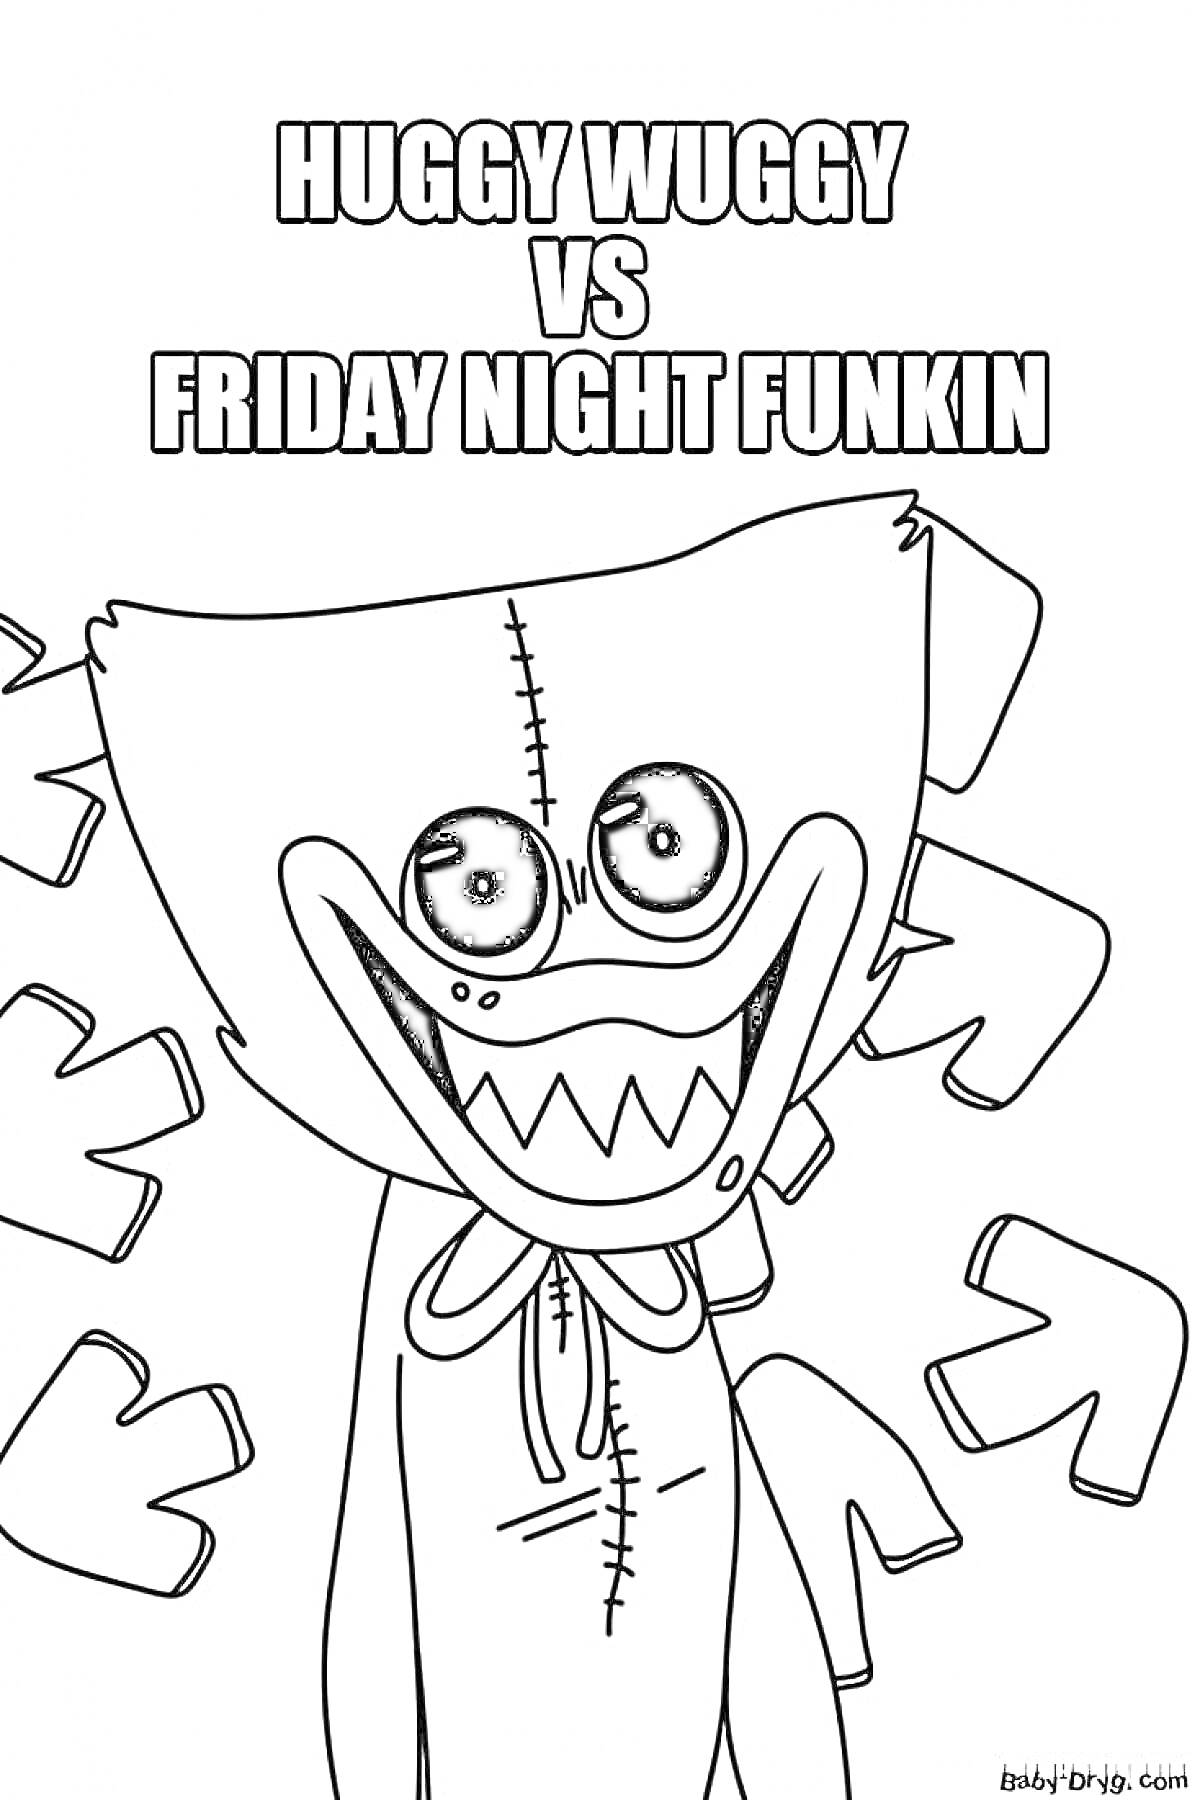 Раскраска Huggy Wuggy против Friday Night Funkin, персонаж Huggy Wuggy, стрелки направления